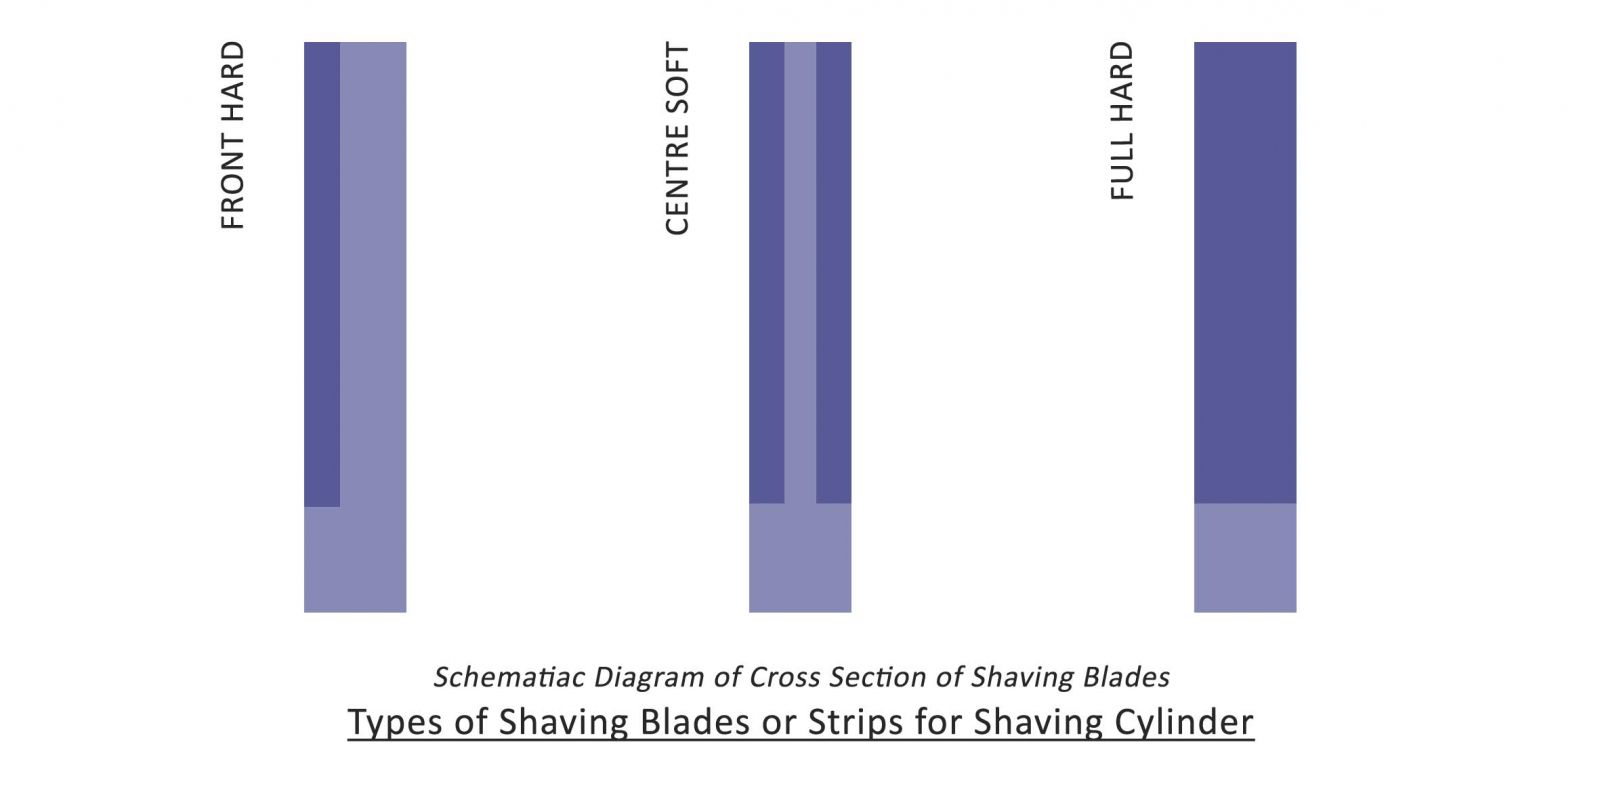 Types of Shaving Blades or Strips for Shaving Cylinder